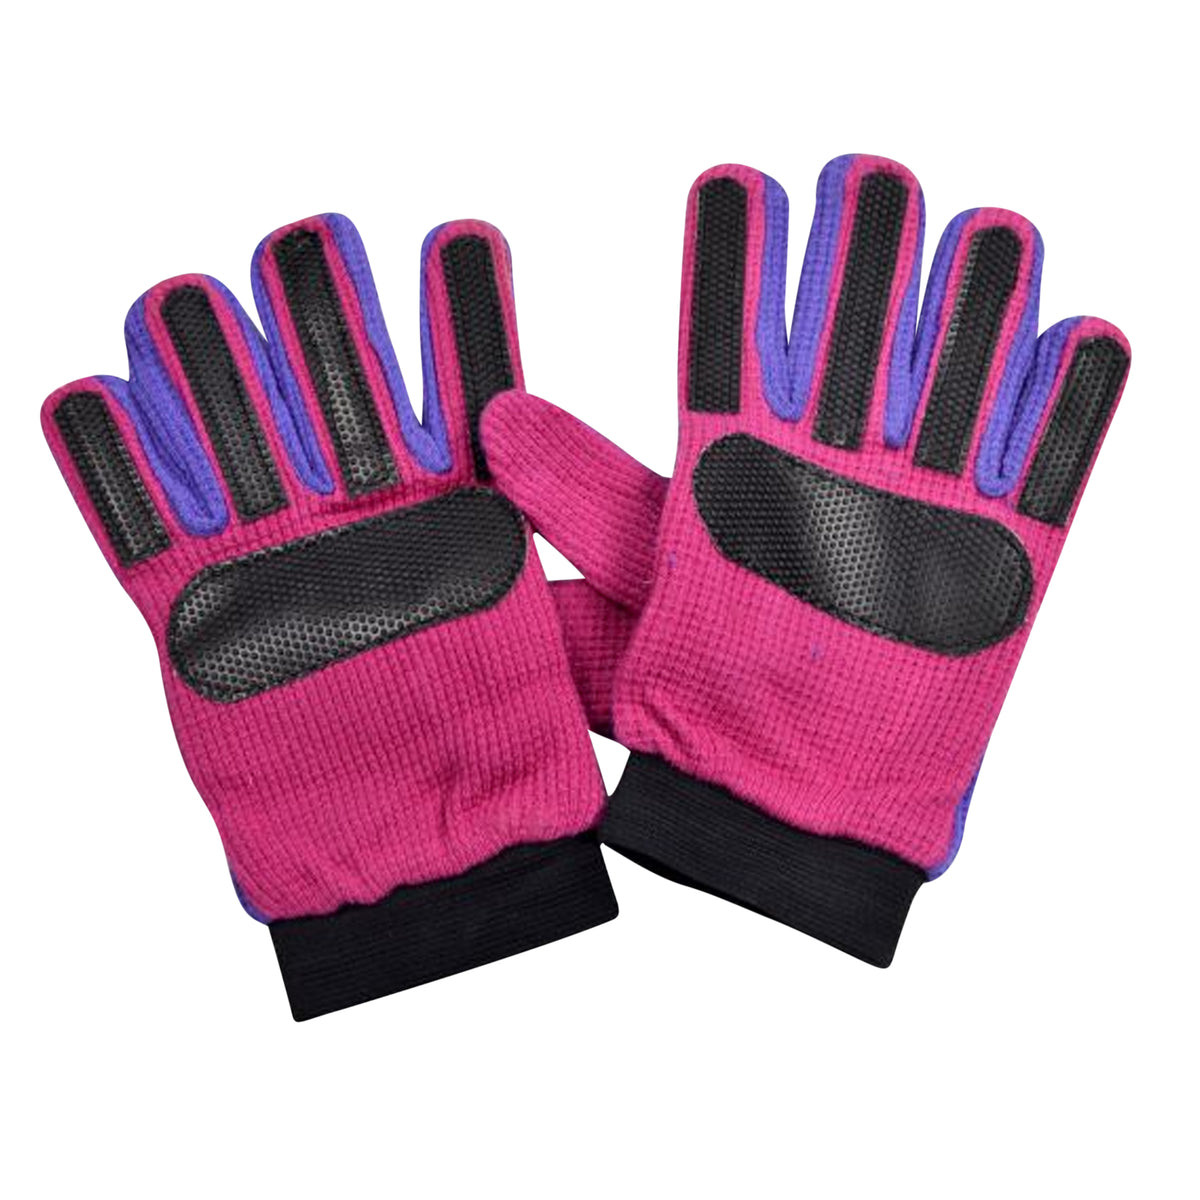 Ultratec Football Goalkeeper Gloves